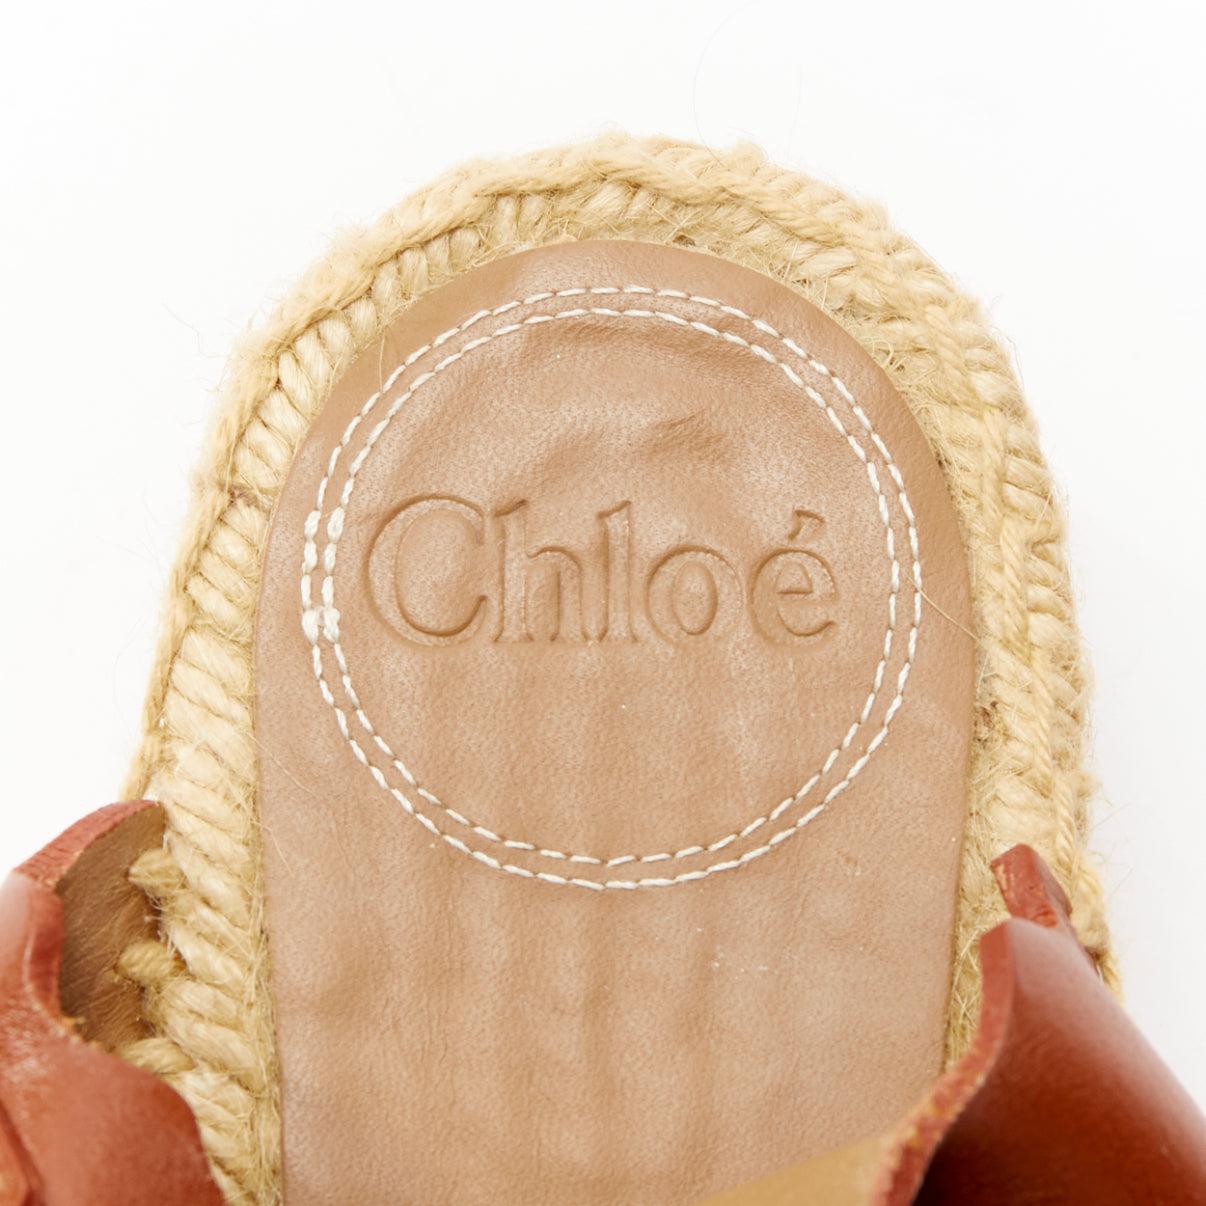 CHLOE dark brown scalloped edge gold buckle jute espadrille platform sandal EU36 For Sale 5